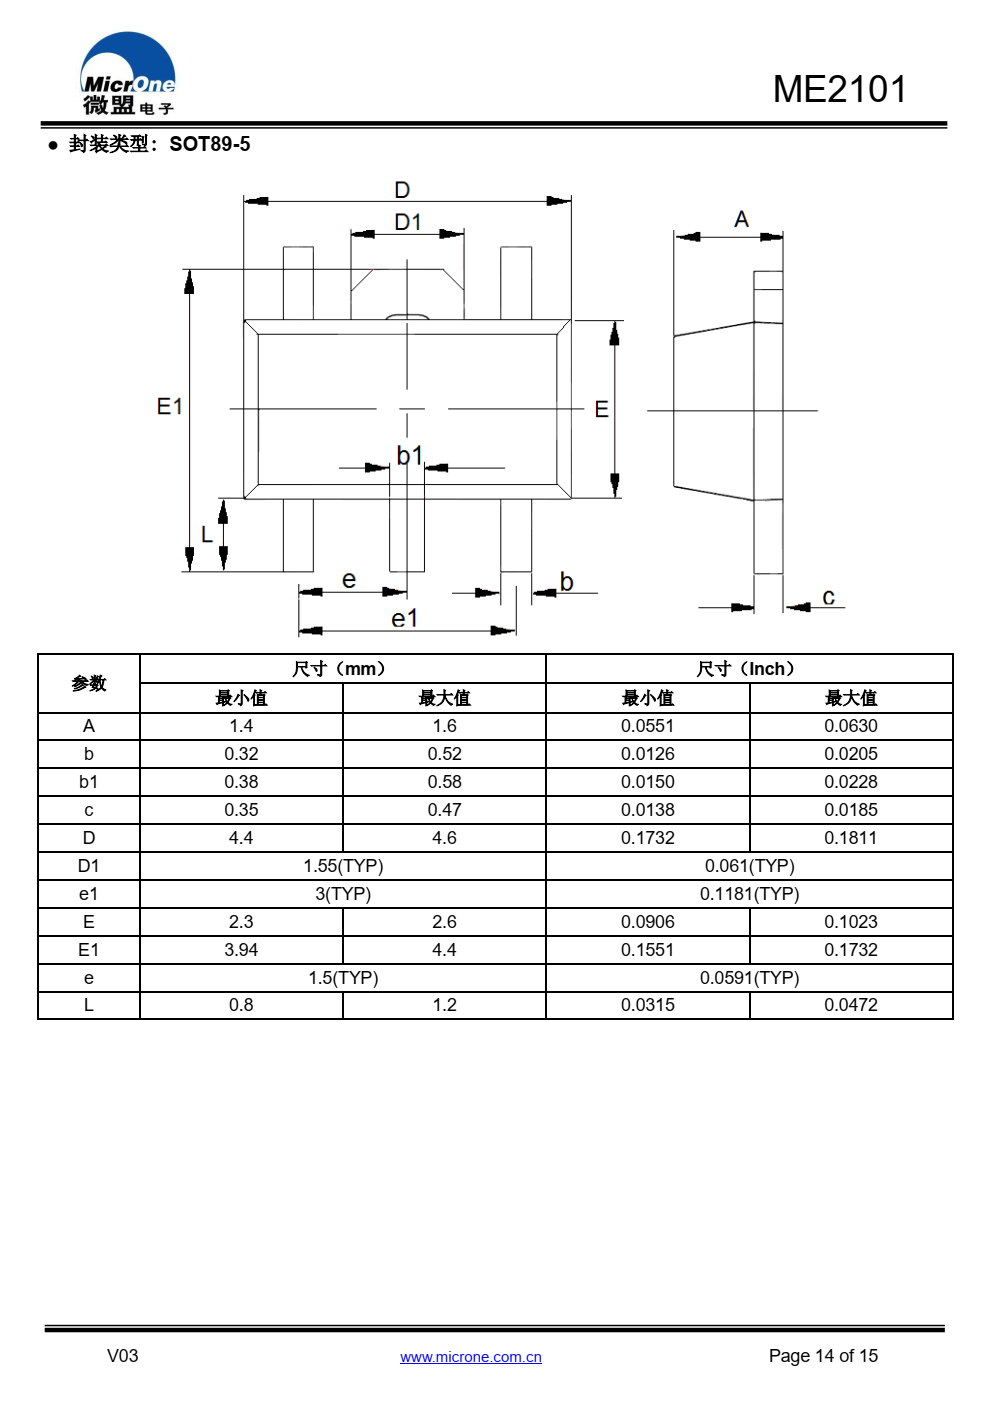 ME2101 系列 DC/DC 芯片是采用 CMOS 工艺制造 的低静态电流的 PWM 开关型 DC/DC 升压转换器